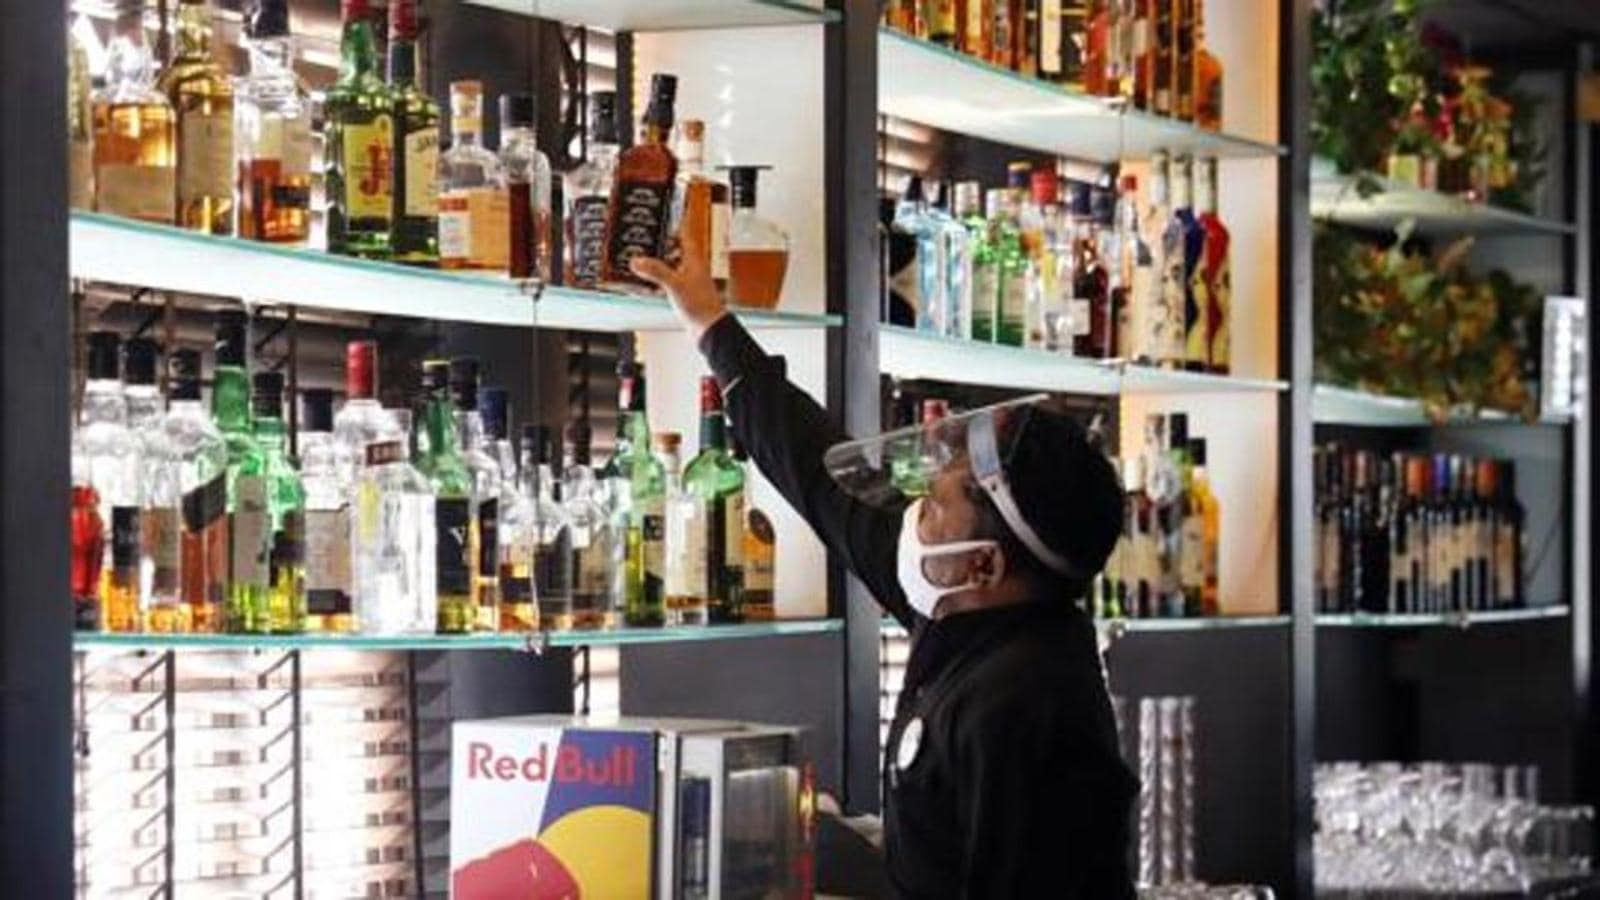 Delhi hotels, restaurants not allowed to serve liquor yet: Excise dept |  Latest News Delhi - Hindustan Times